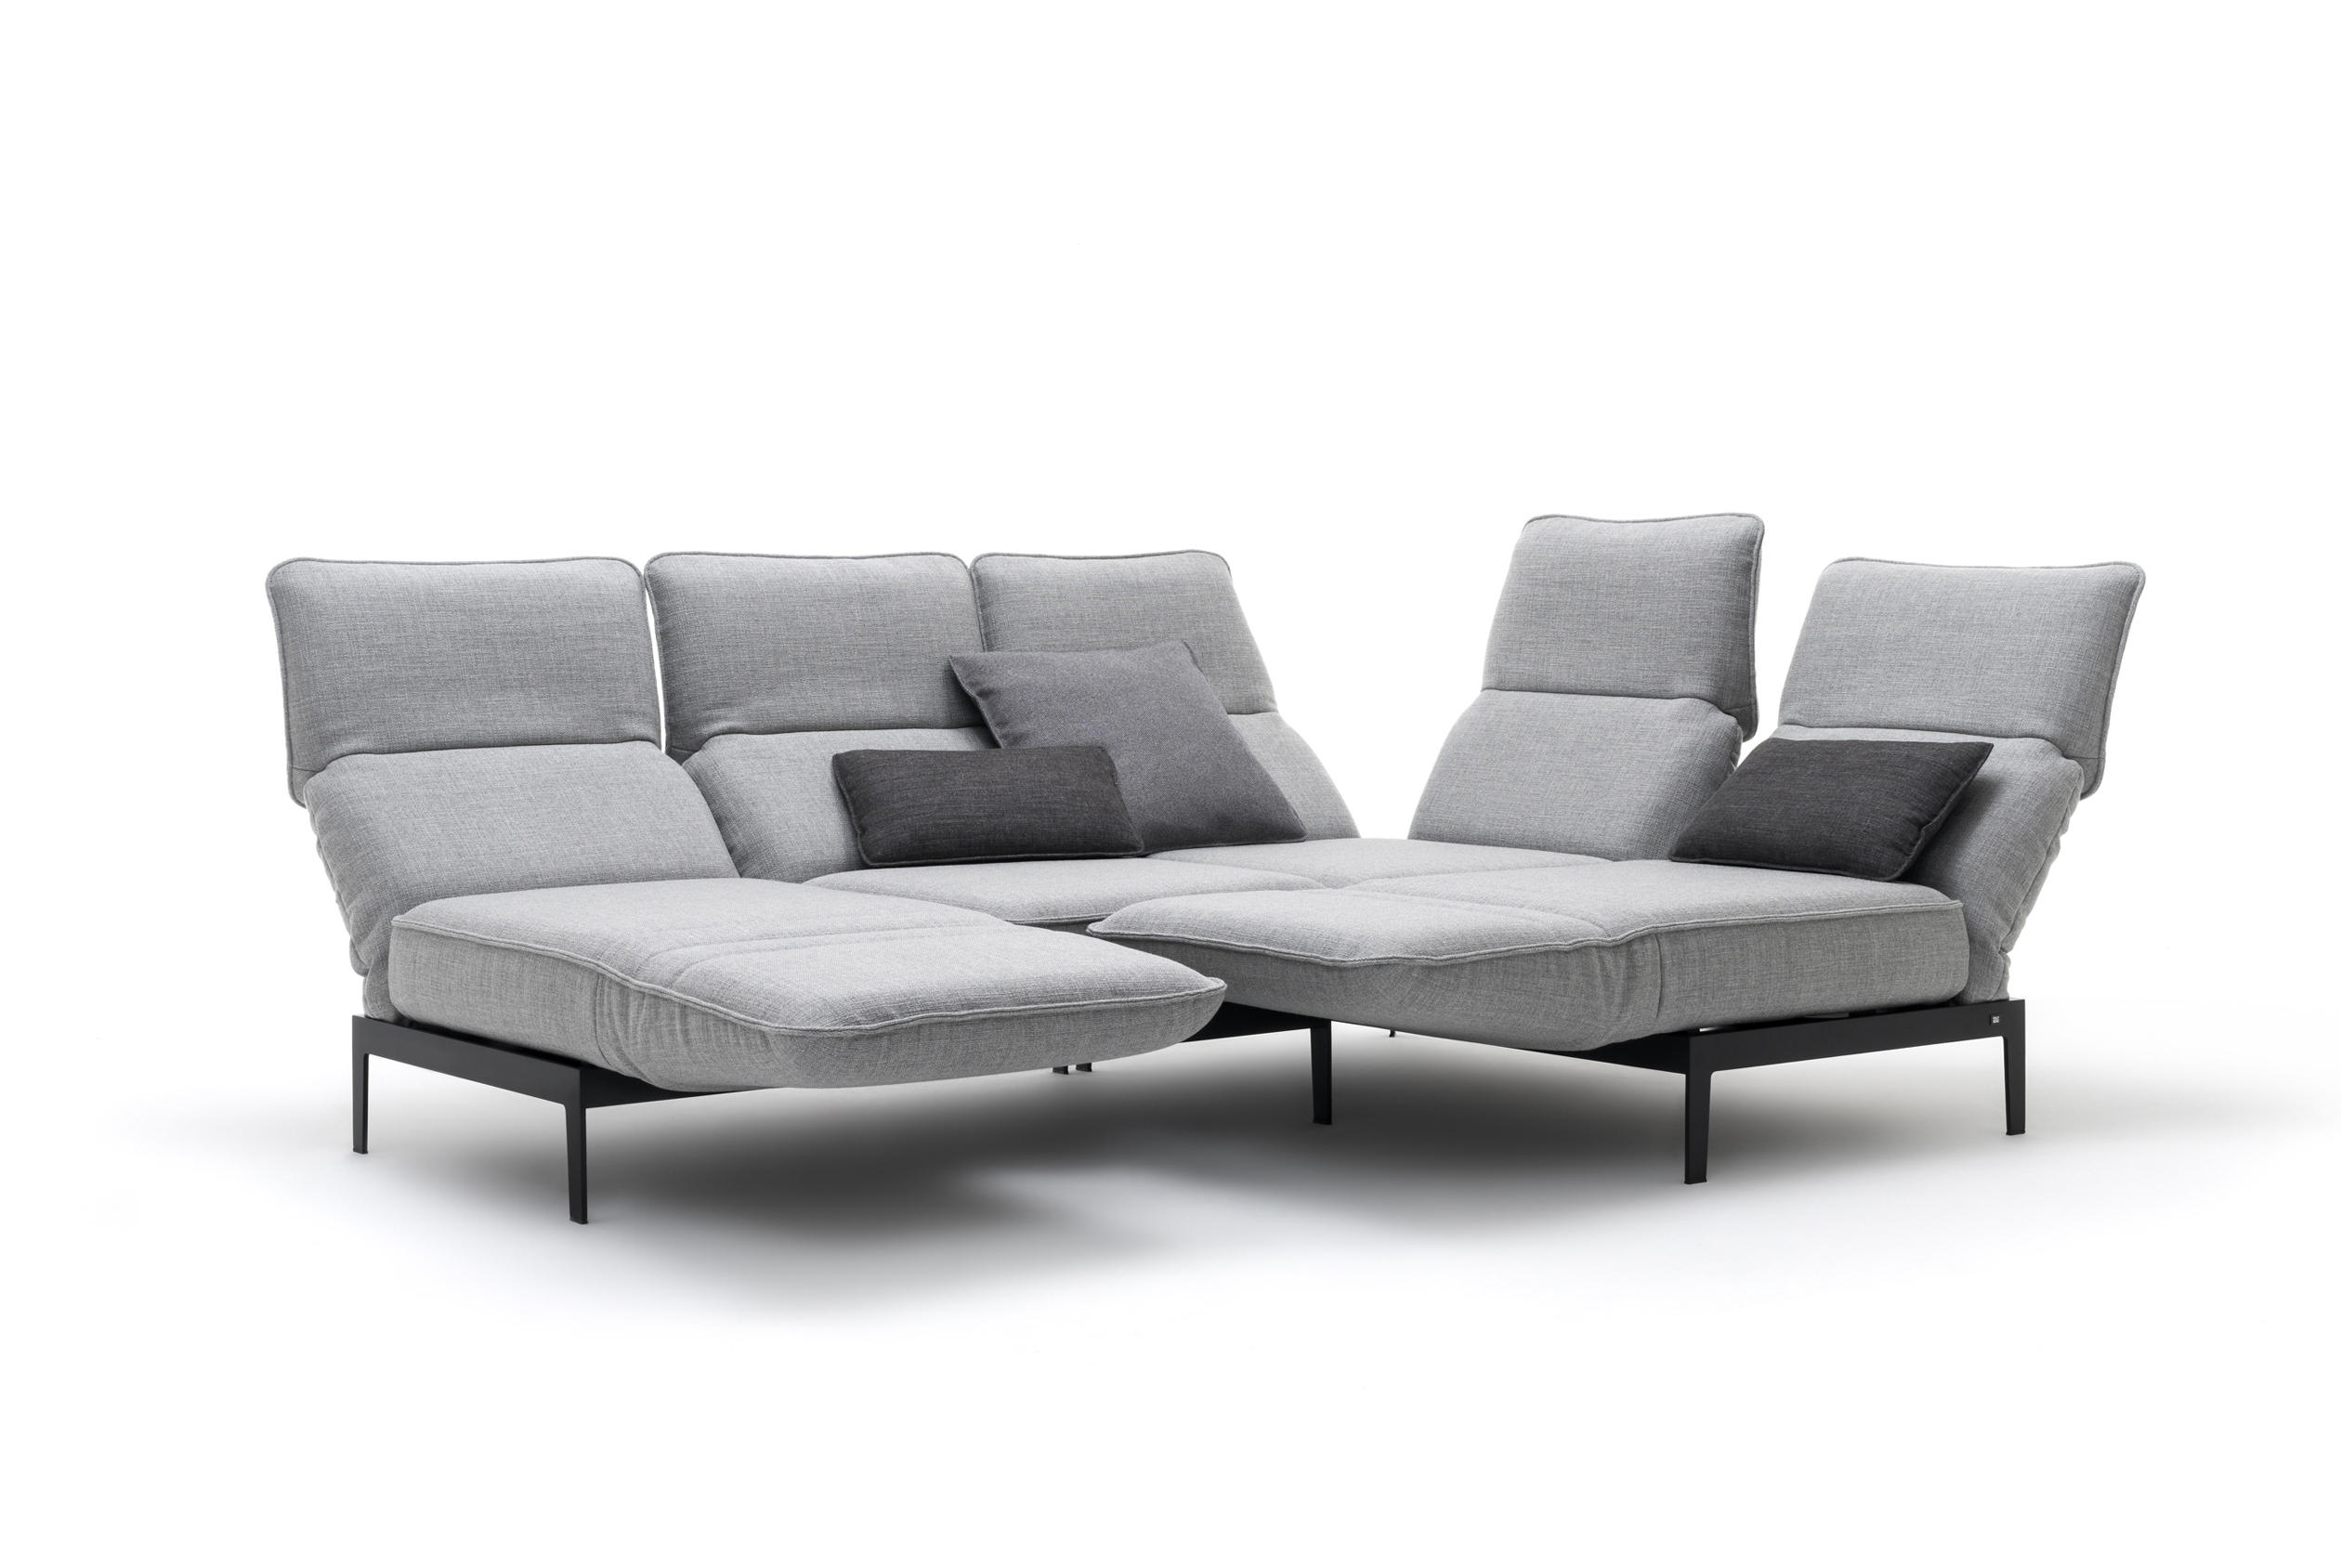 Rolf Benz 386 MERA & designer furniture | Architonic